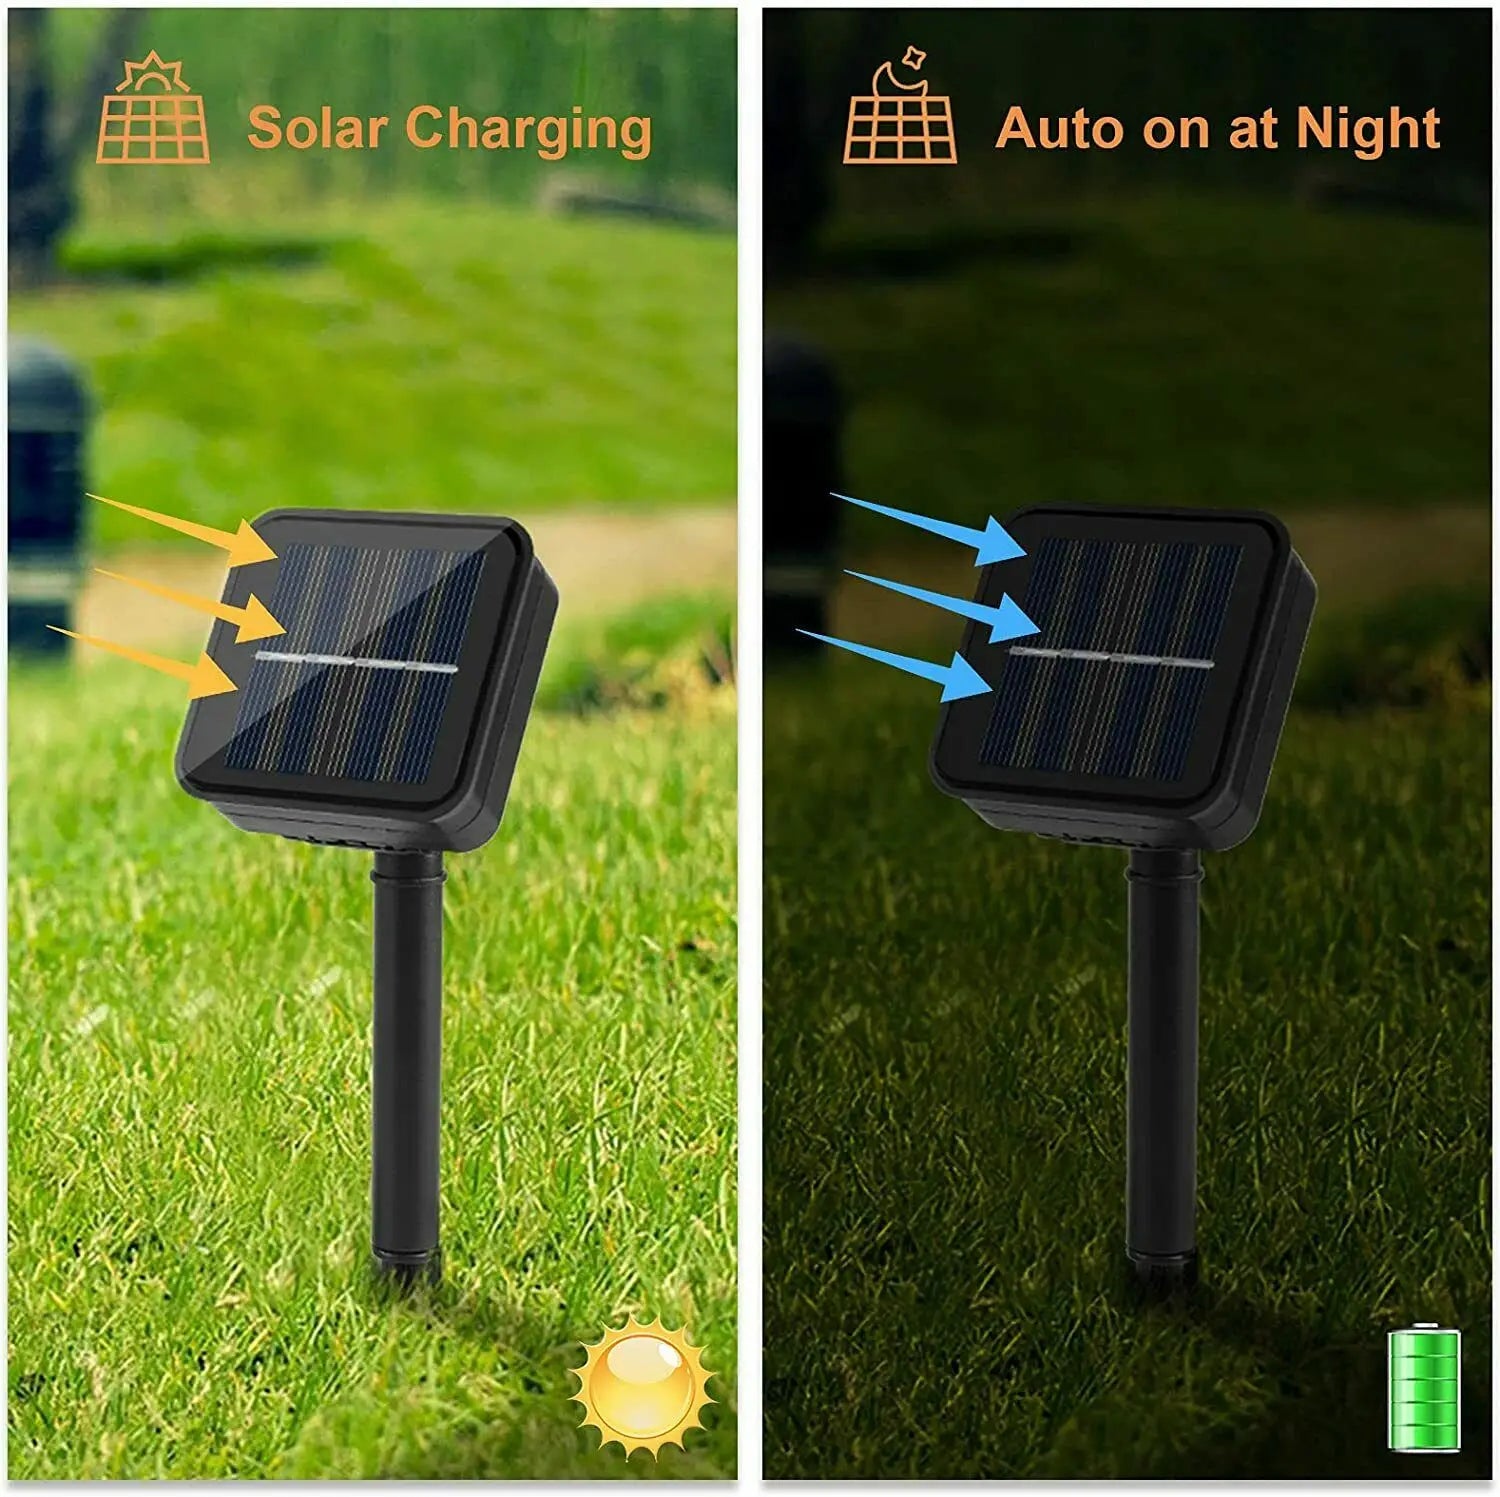 32m/22m/7m Solar Fairy Garden Light, Automatically turns on at night using solar power.